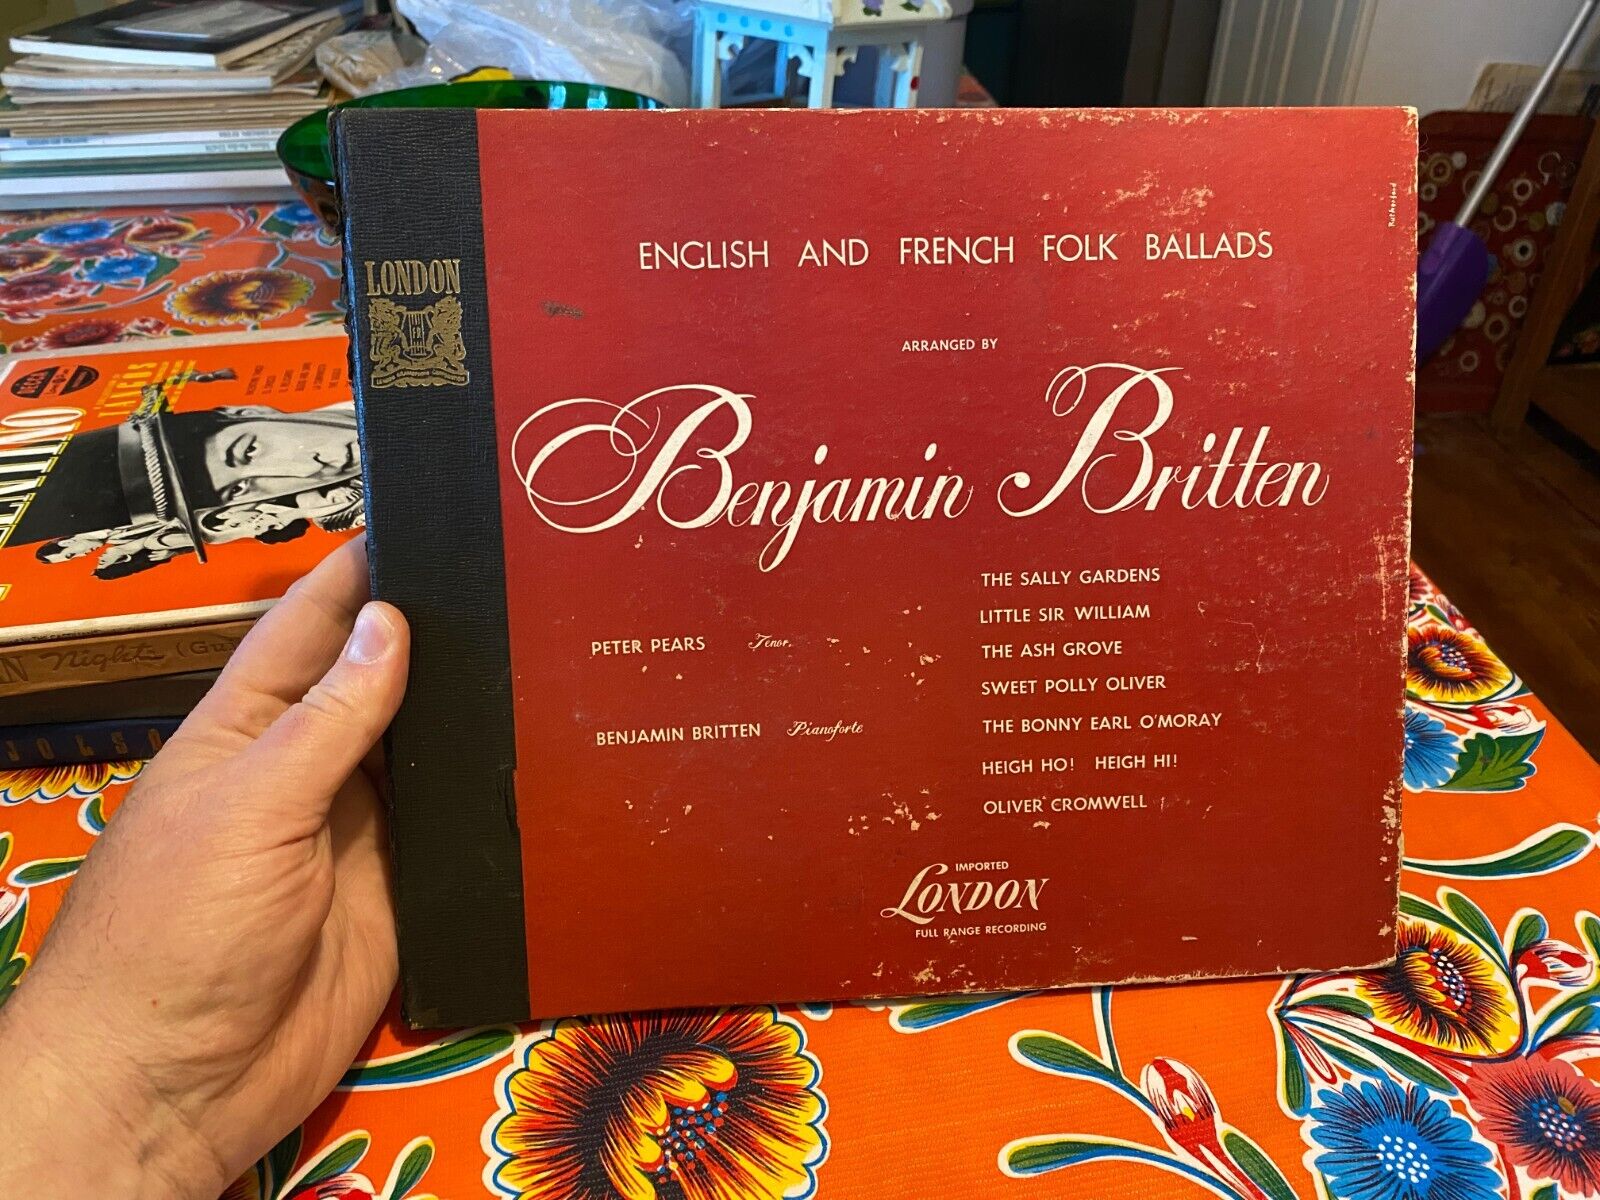 English & French Folk Ballads arranged by Benjamin Britten  Peter Pears, tenor